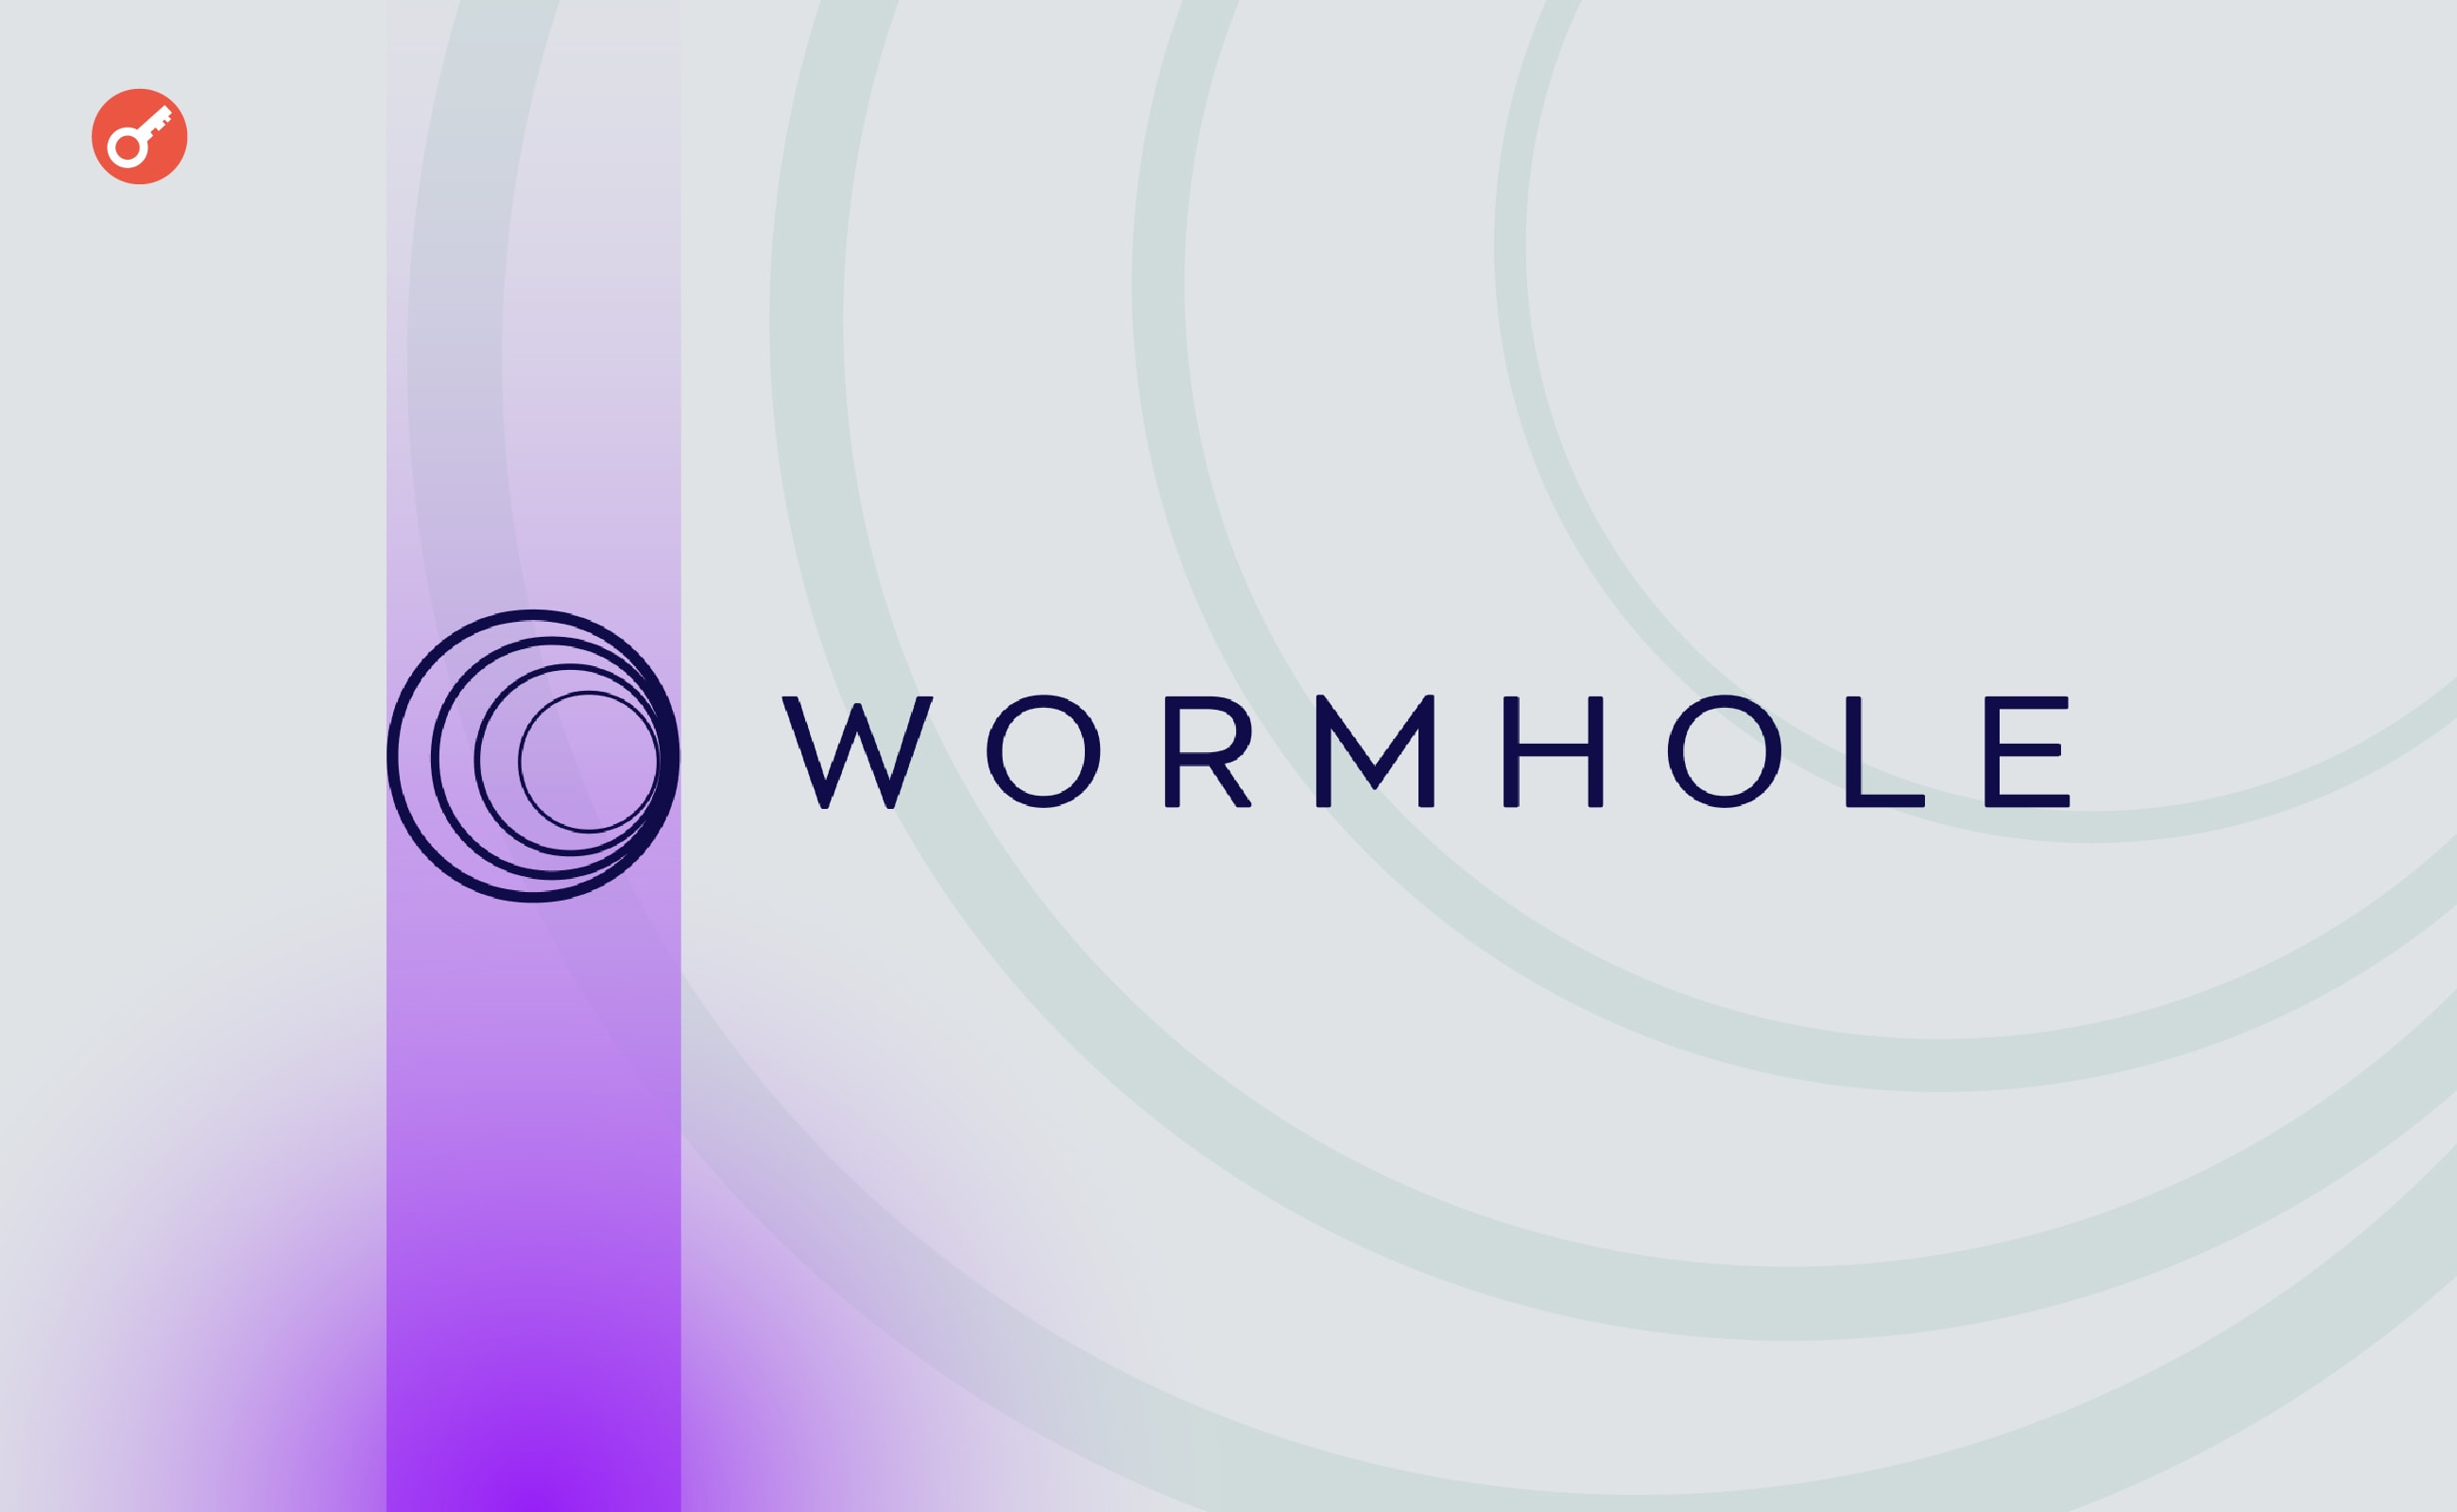 Команда Wormhole оголосила про початок клейма токенів W. Головний колаж новини.